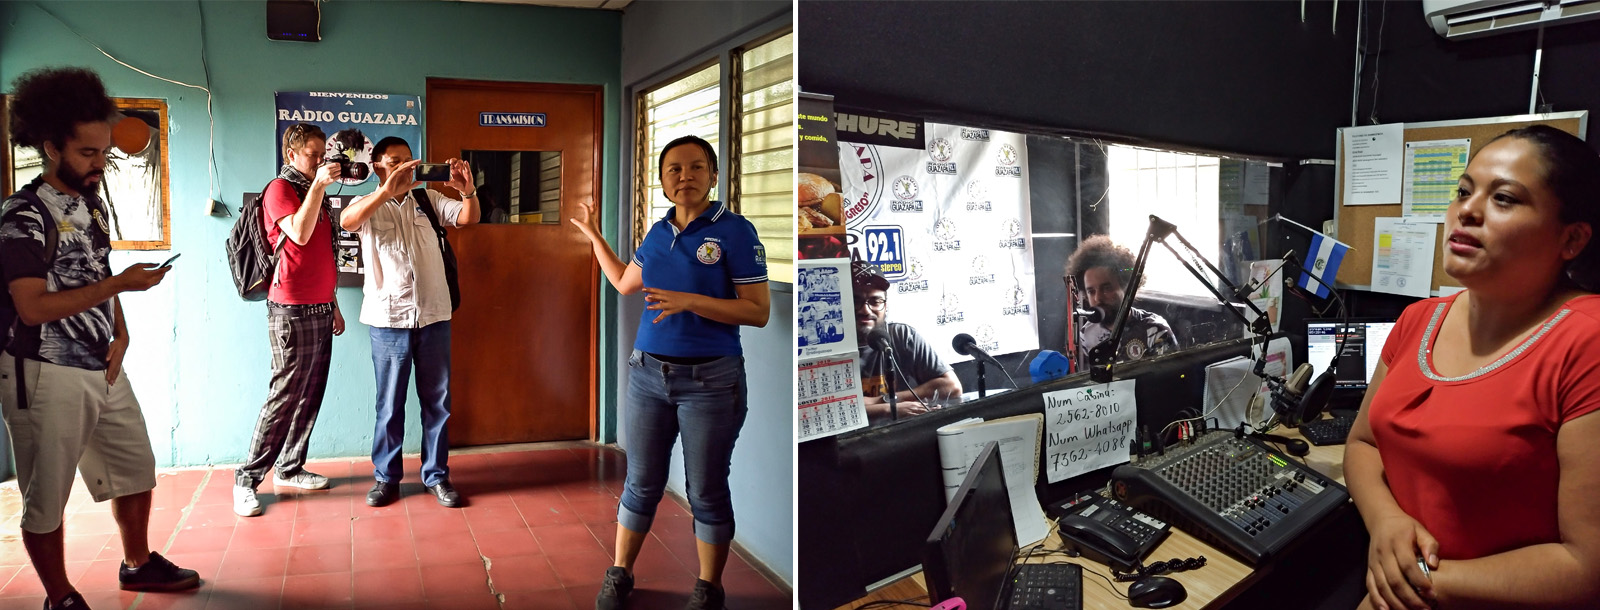 Rádio Guazapa conta com moradores como apresentadores. Foto: Débora Britto/MZ Conteúdo